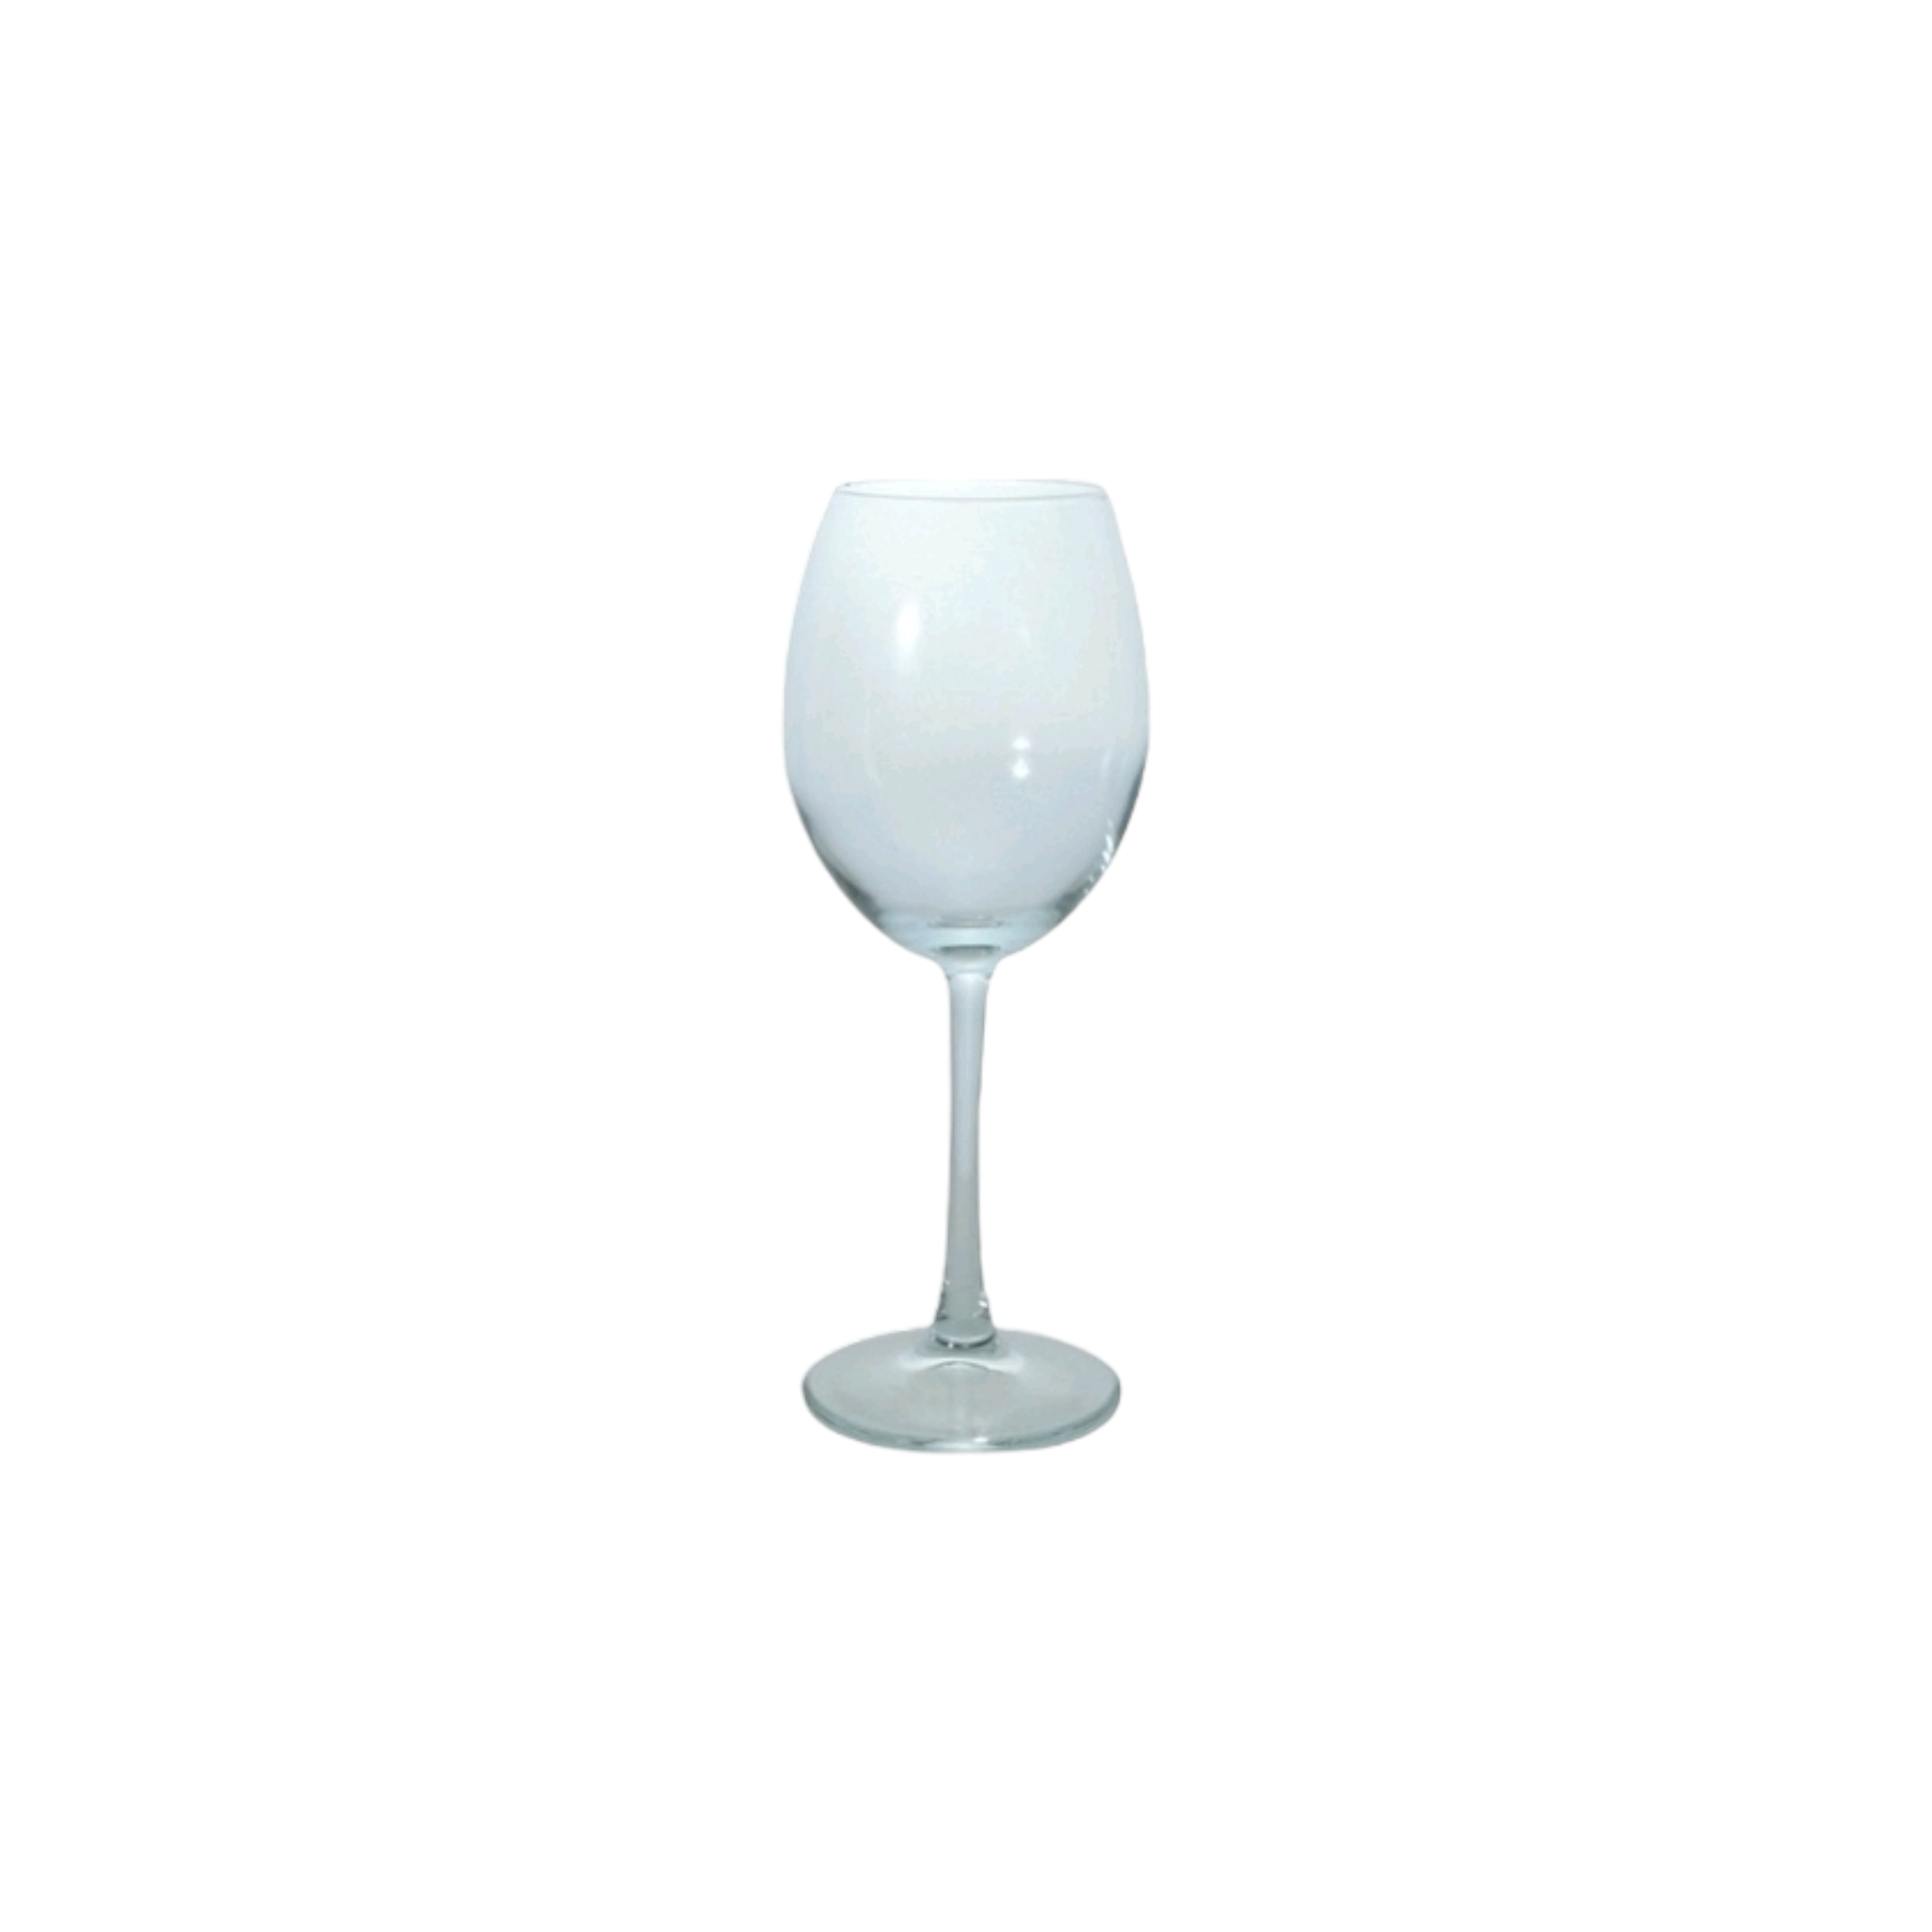 Pasabahce Enotech Glass Tumbler 440ml Red Wine 2pcs 23084